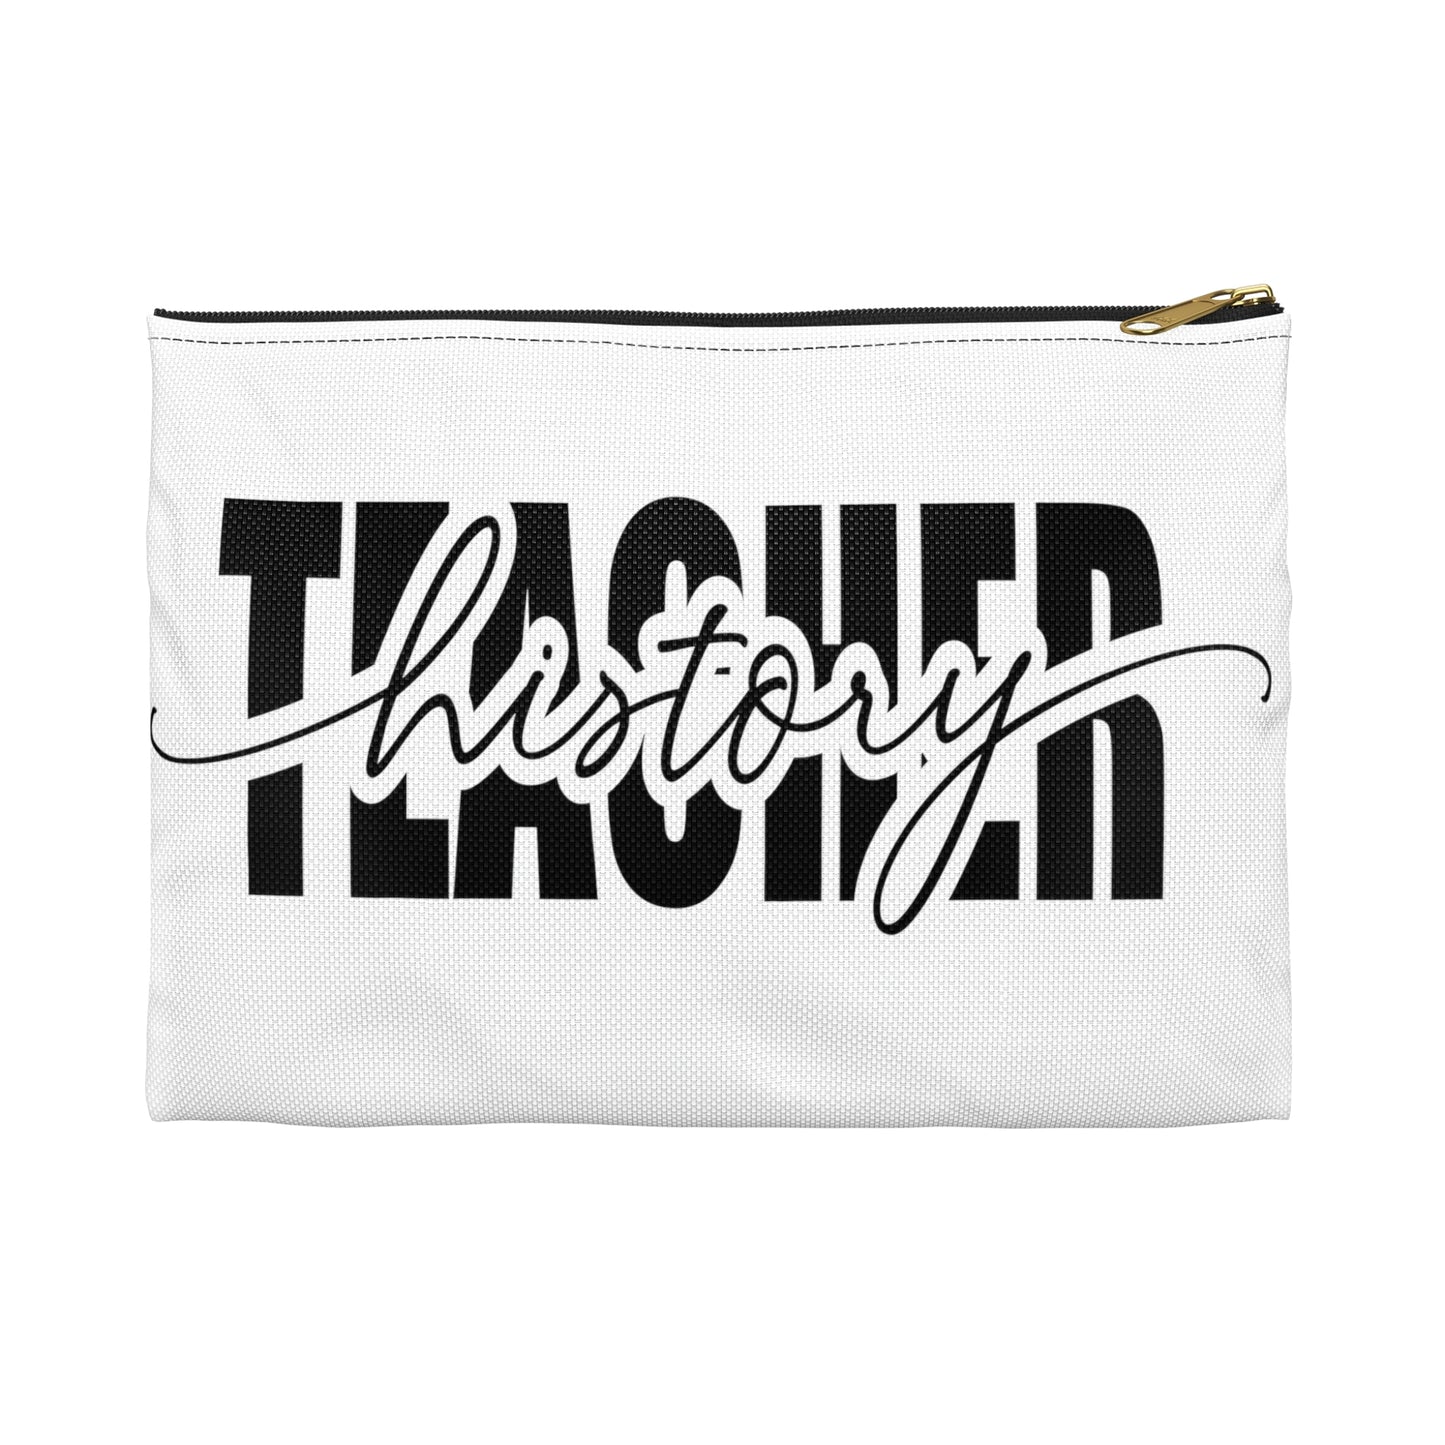 History teacher accessory pouch